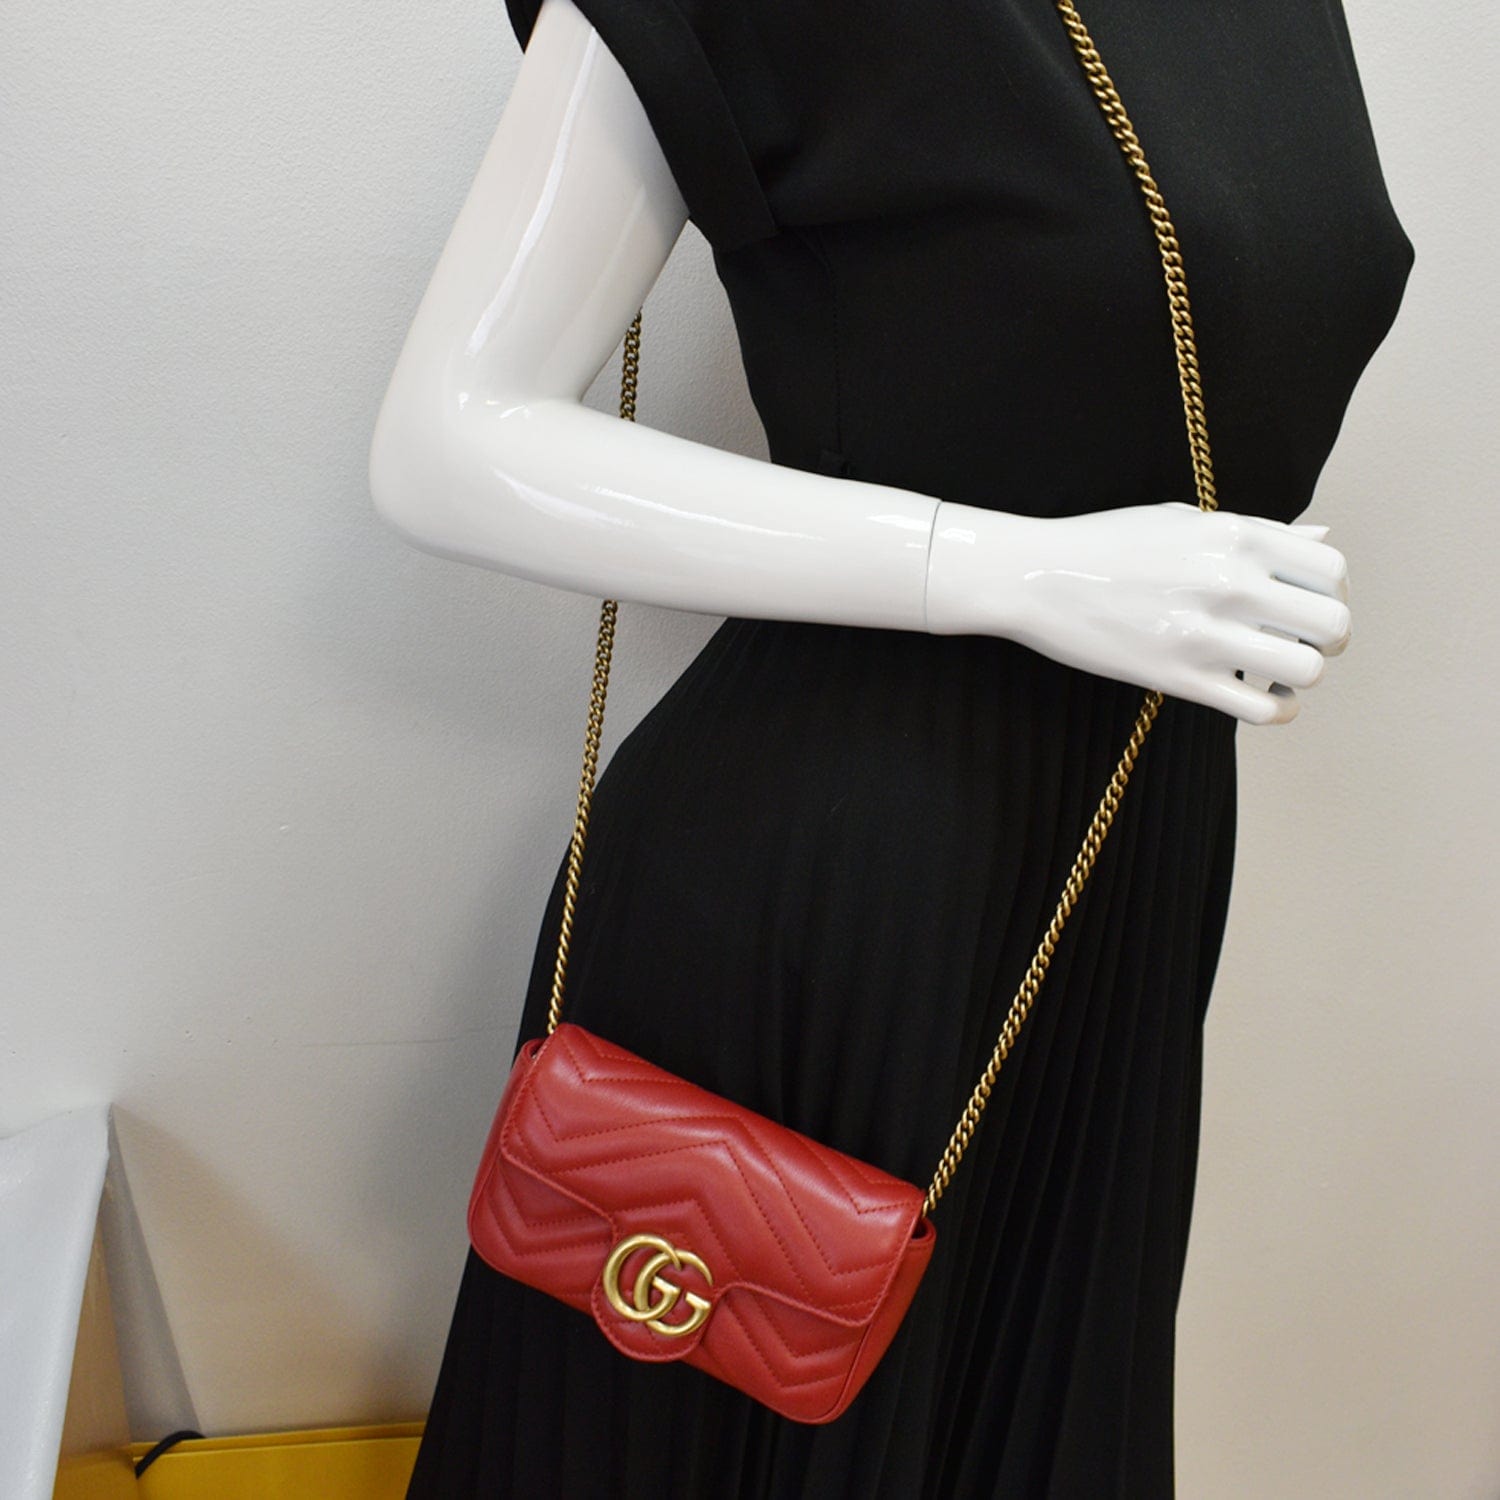 Gucci Mini Leather GG Marmont Shoulder Bag